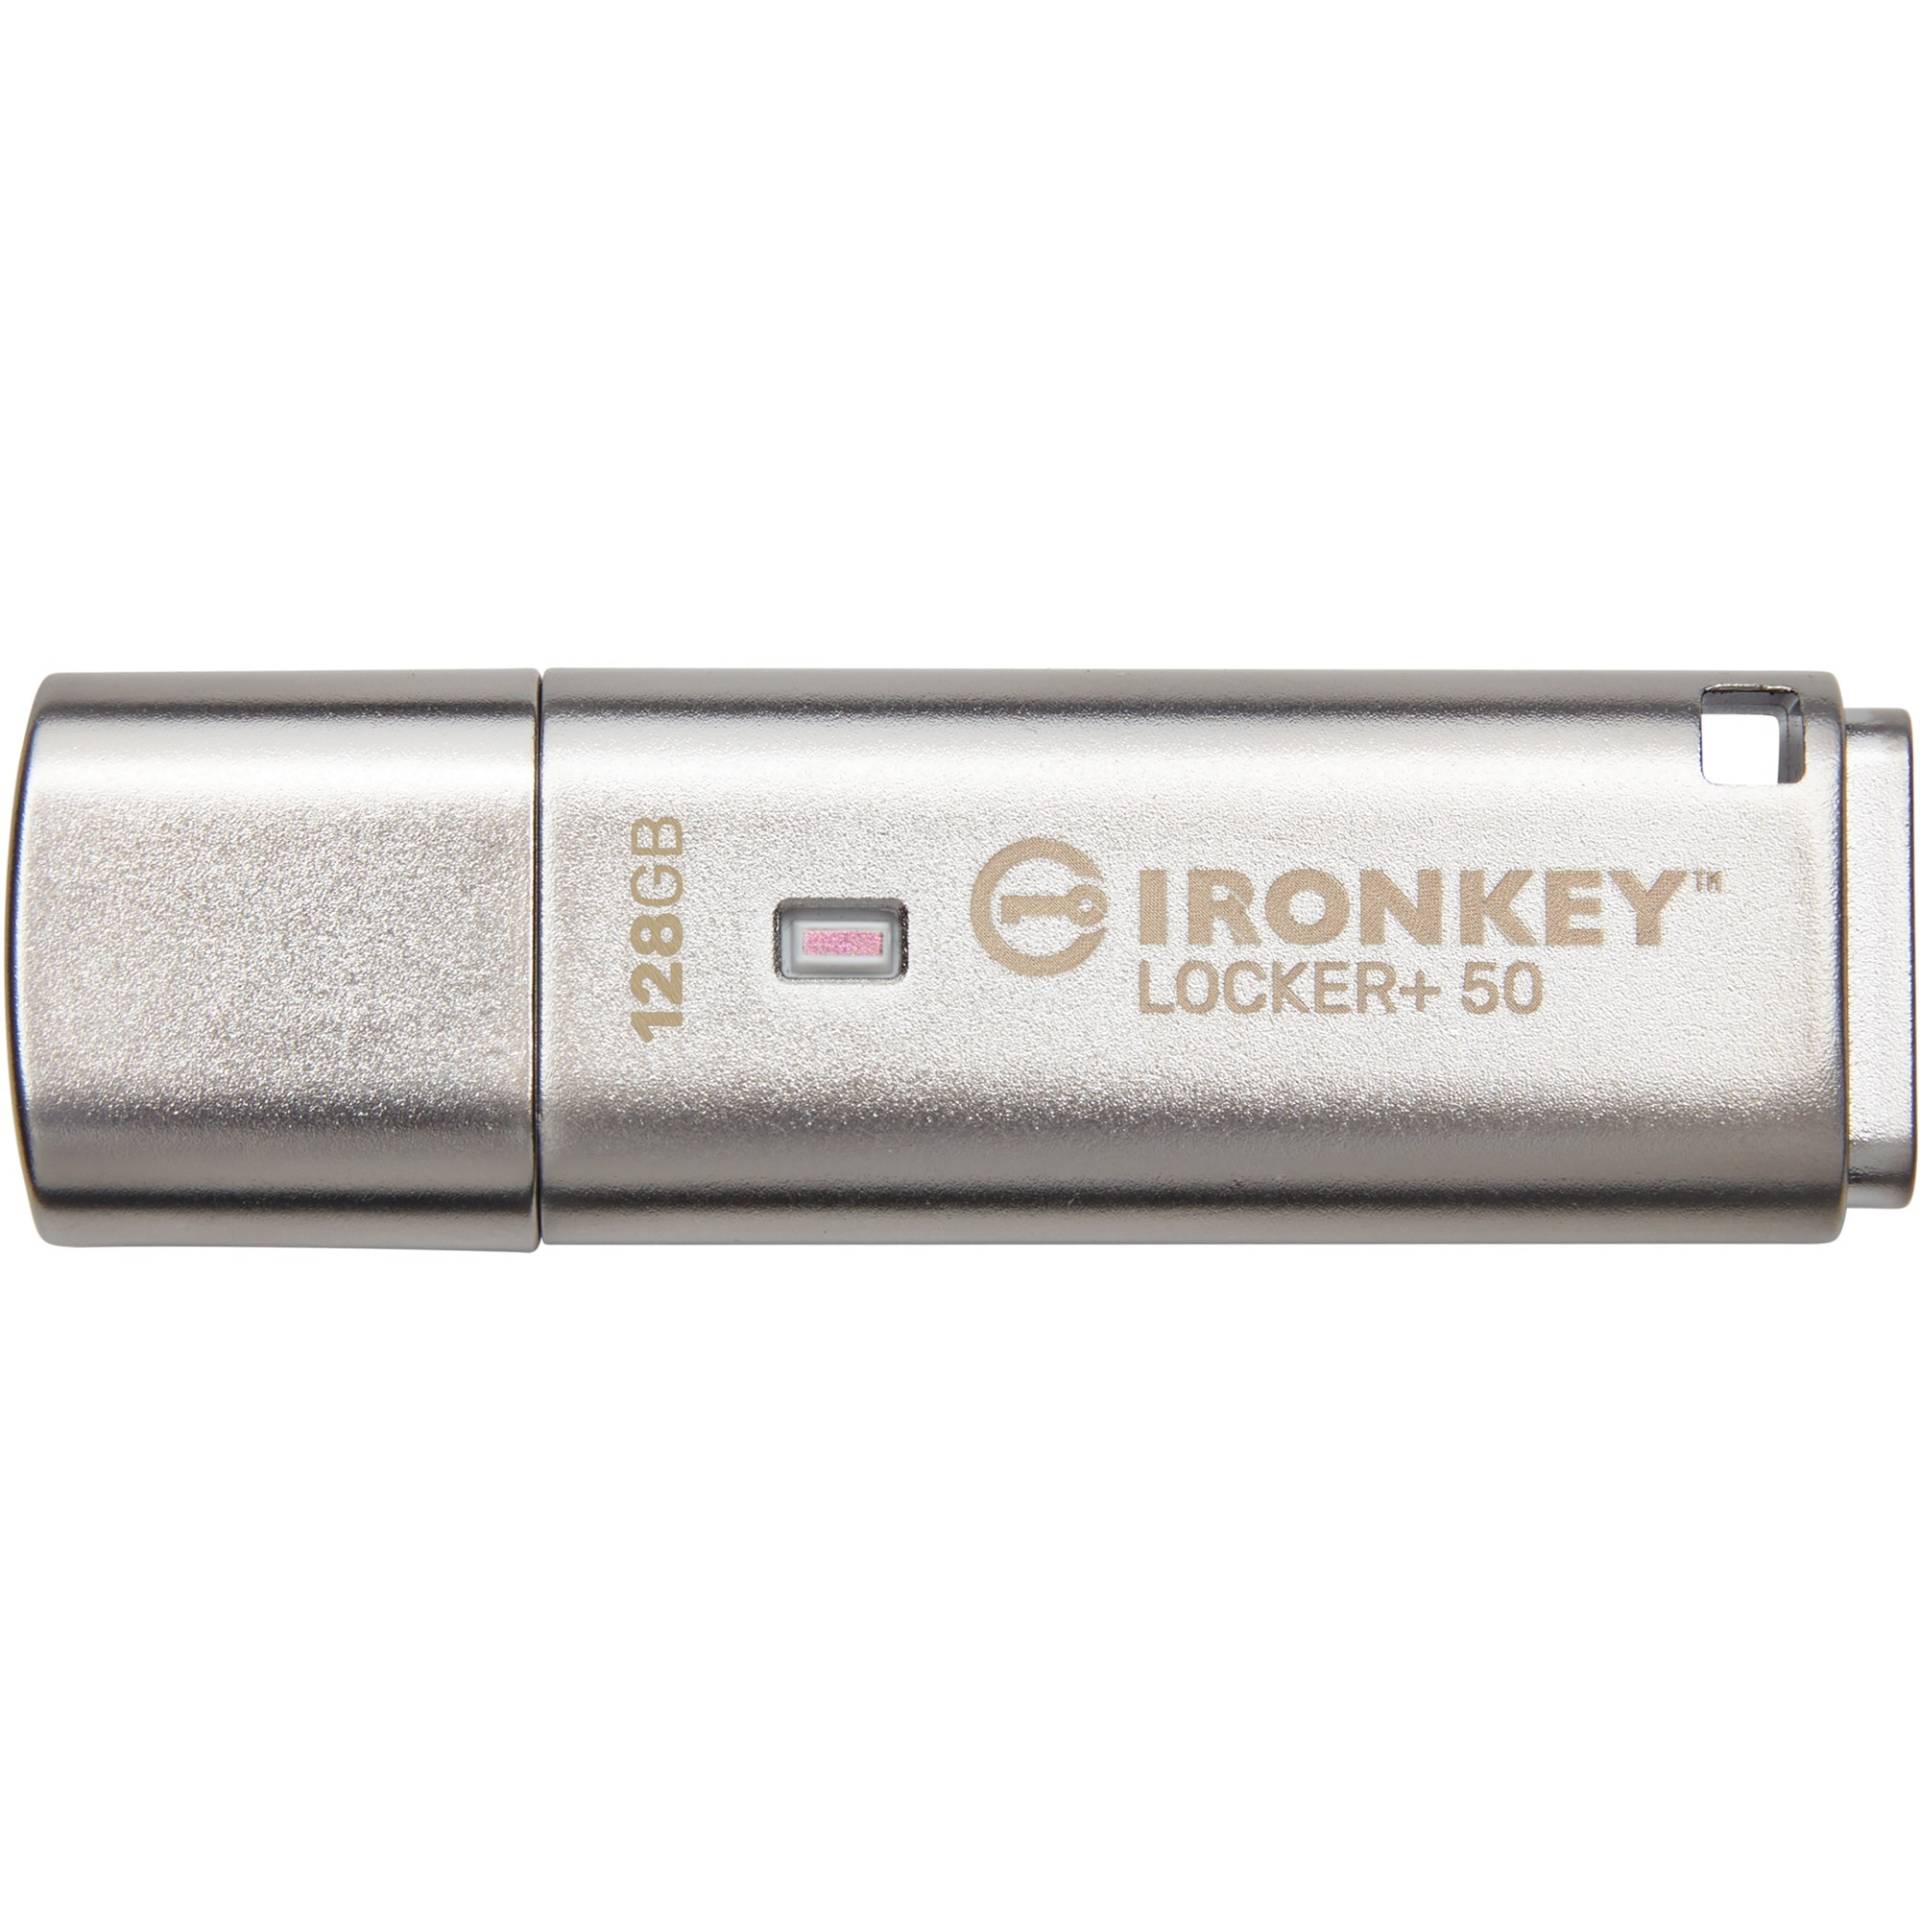 IronKey Locker+ 50 128 GB, USB-Stick von Kingston